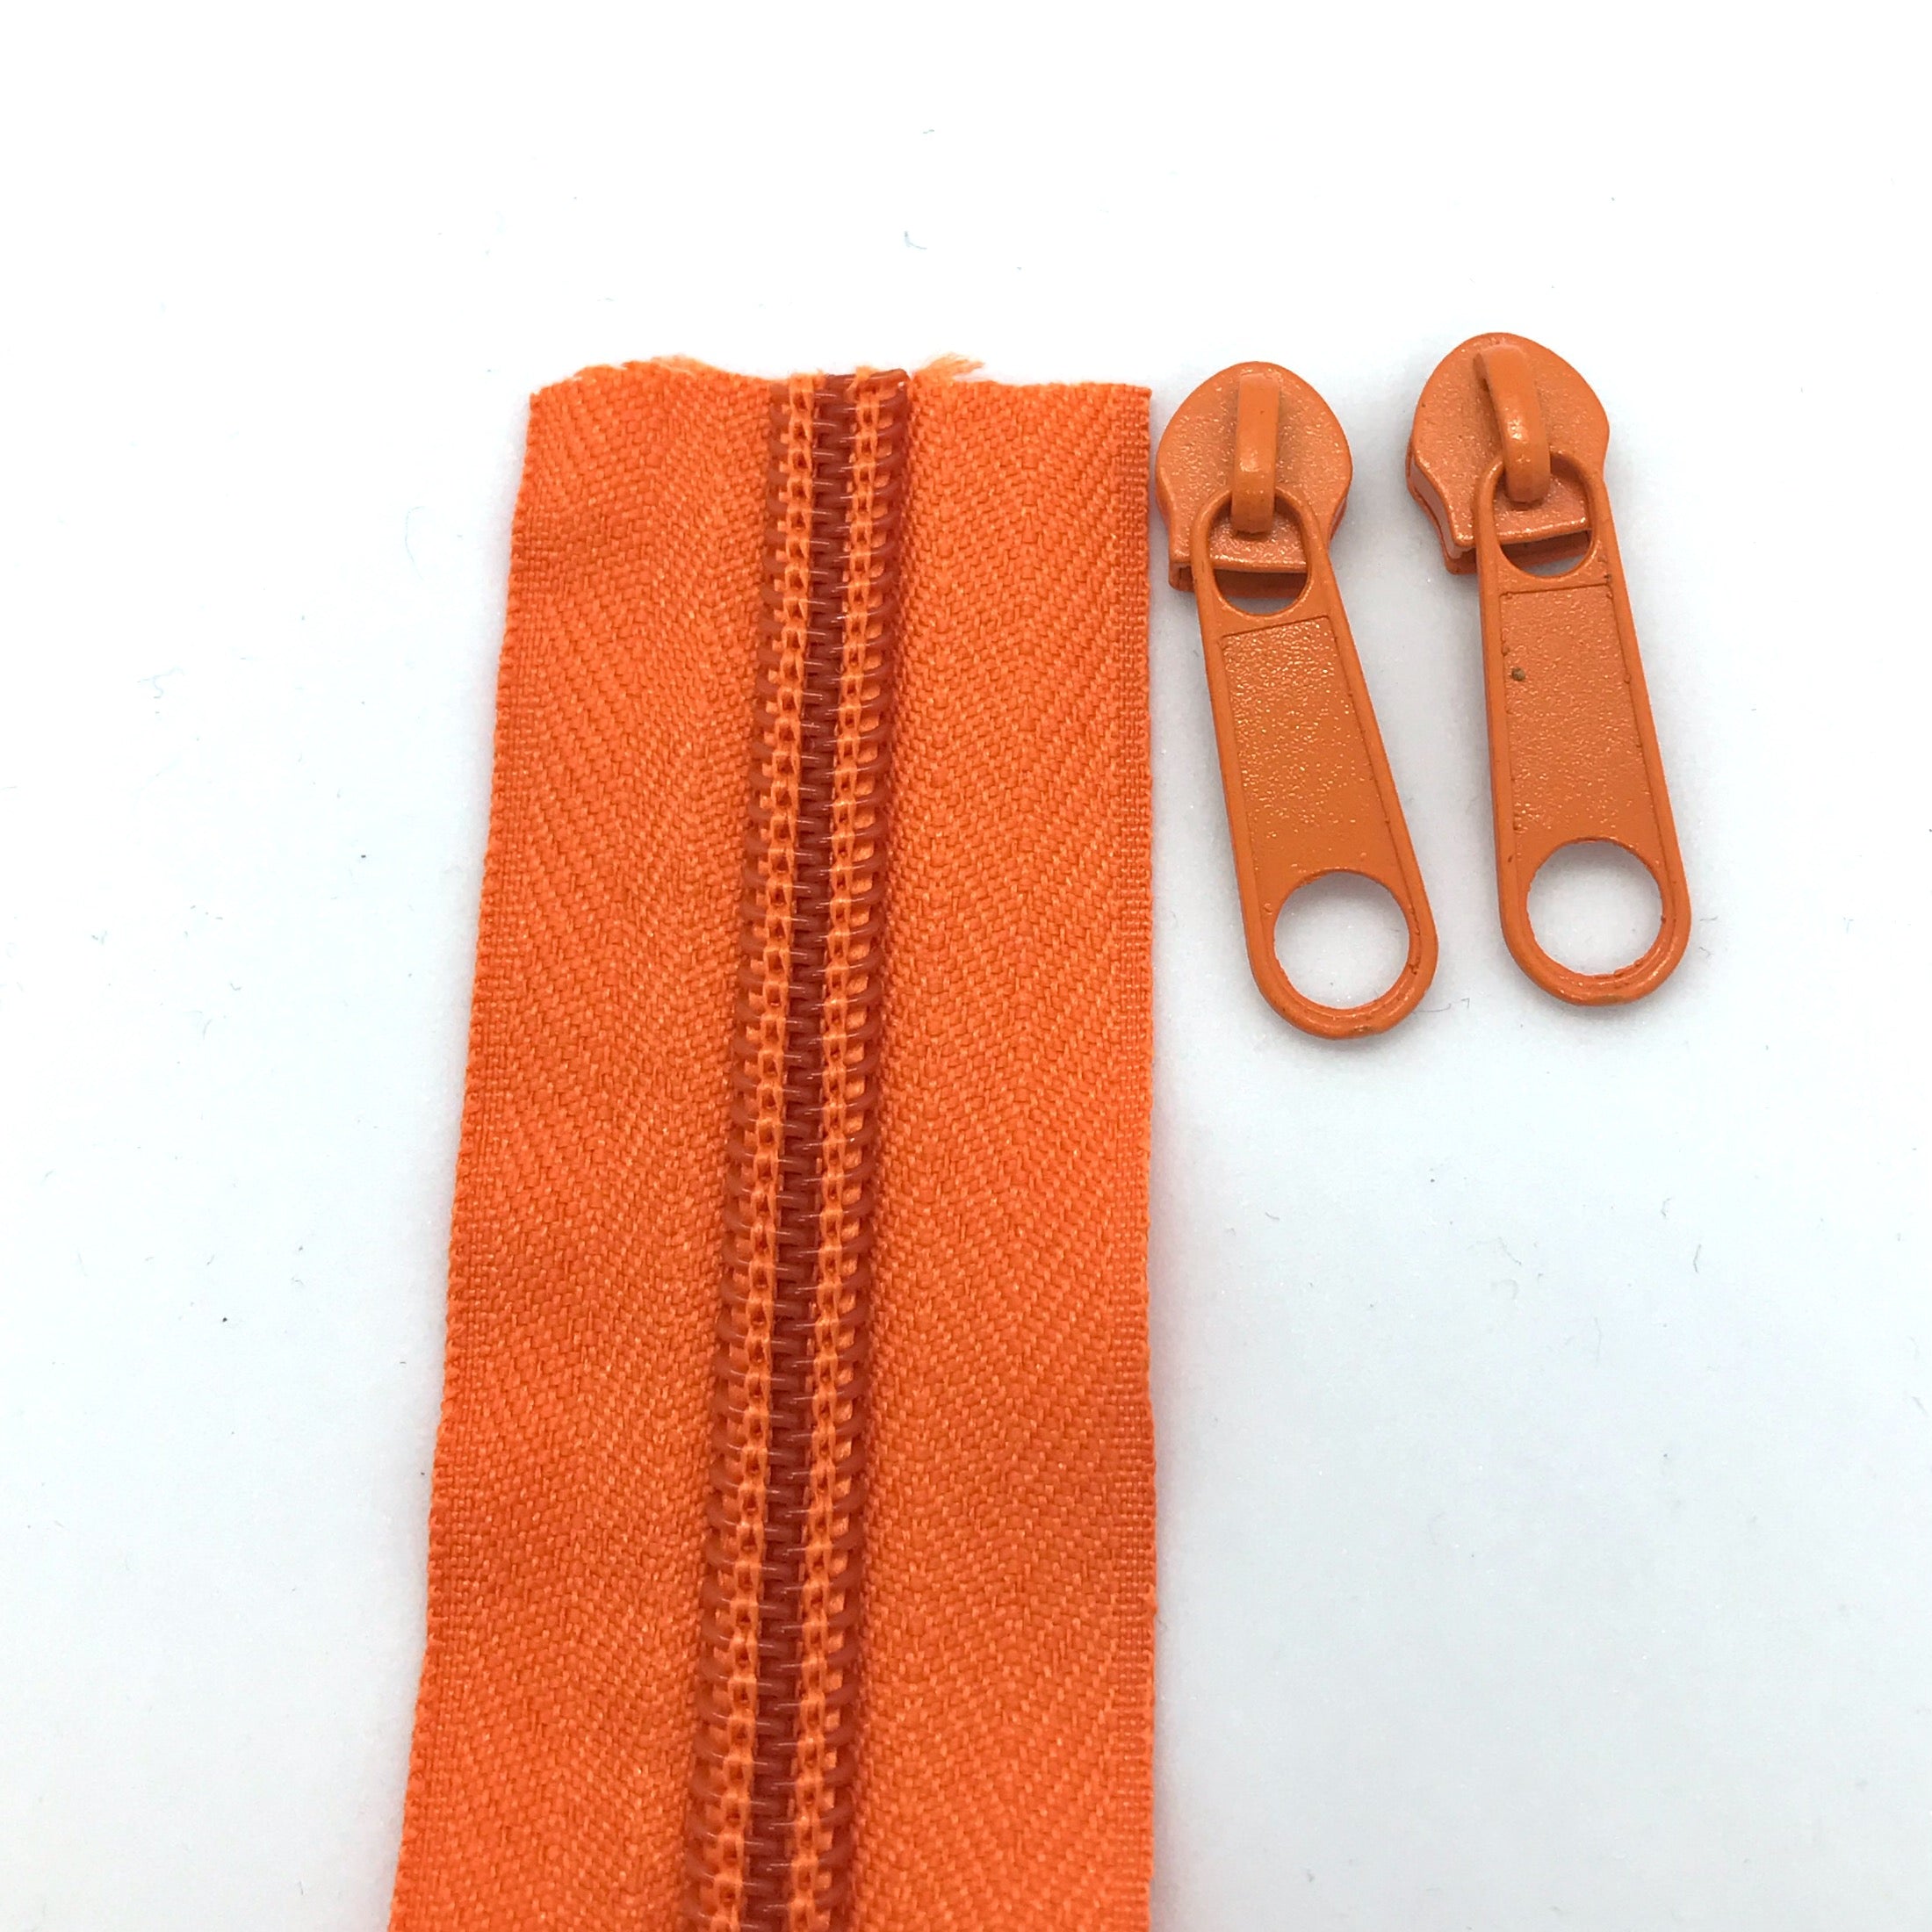 continuous long chain standard zipper tape in orange